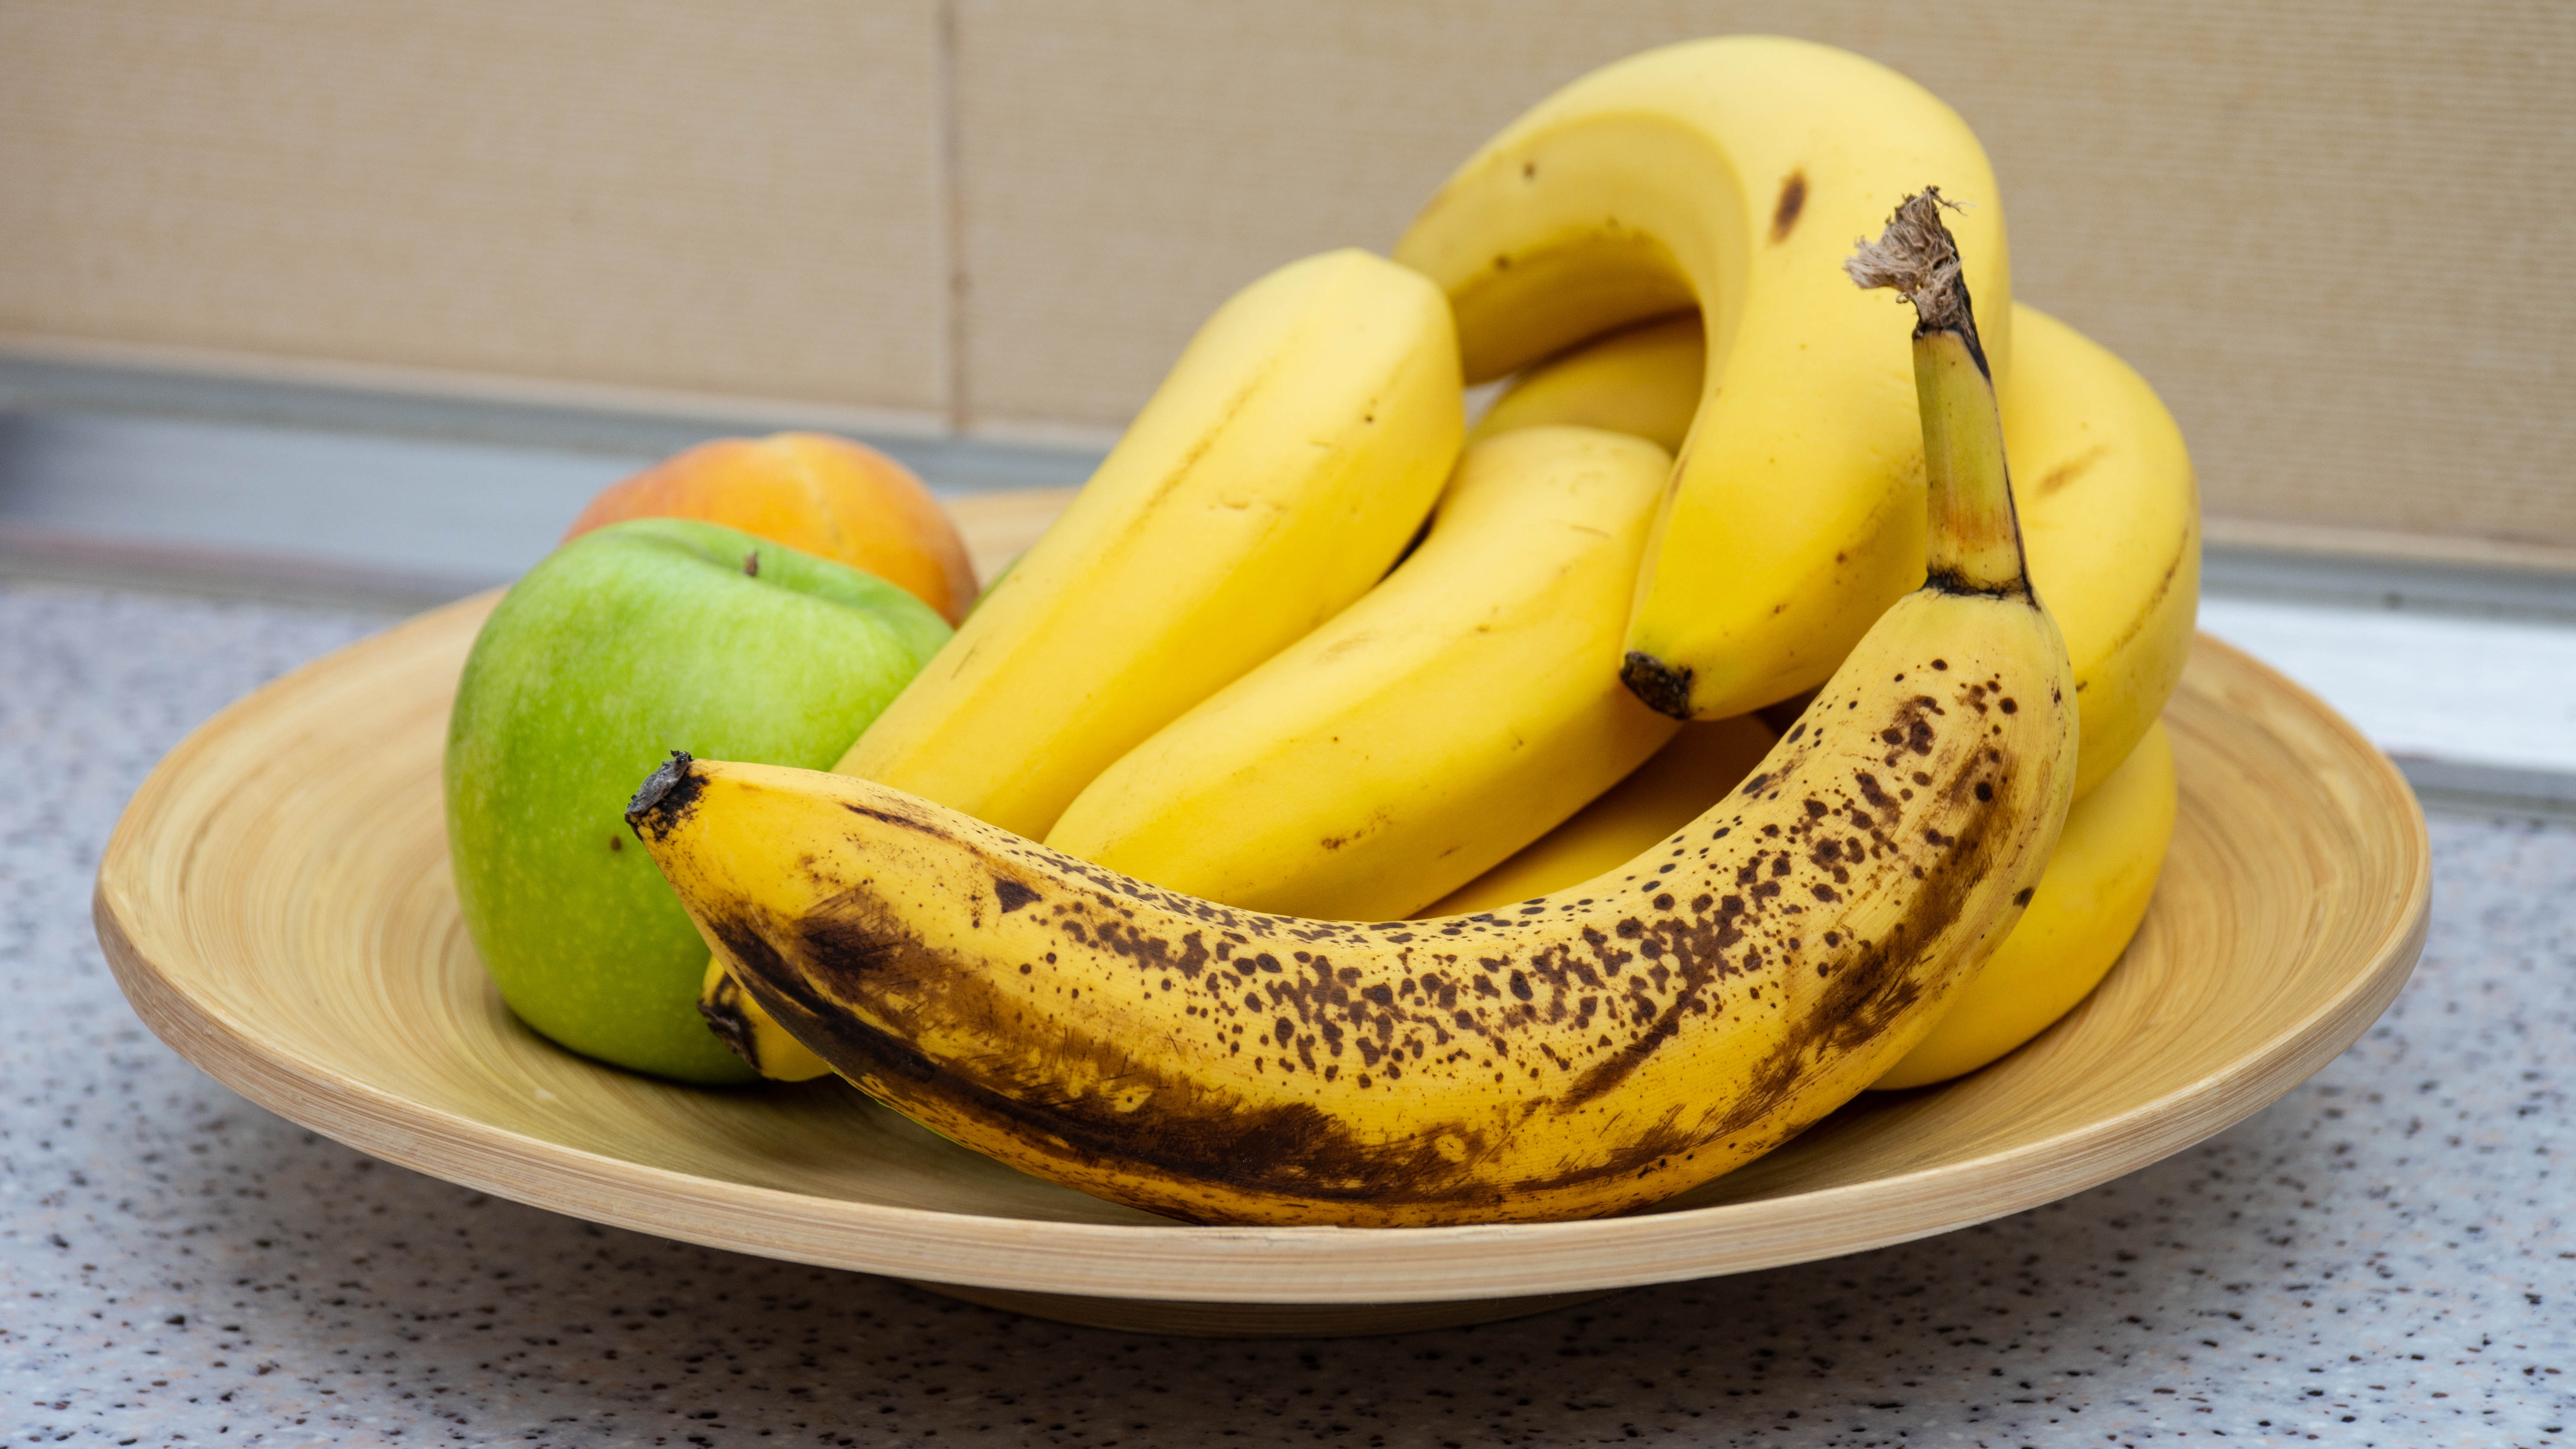 Fruit bowl with bananas